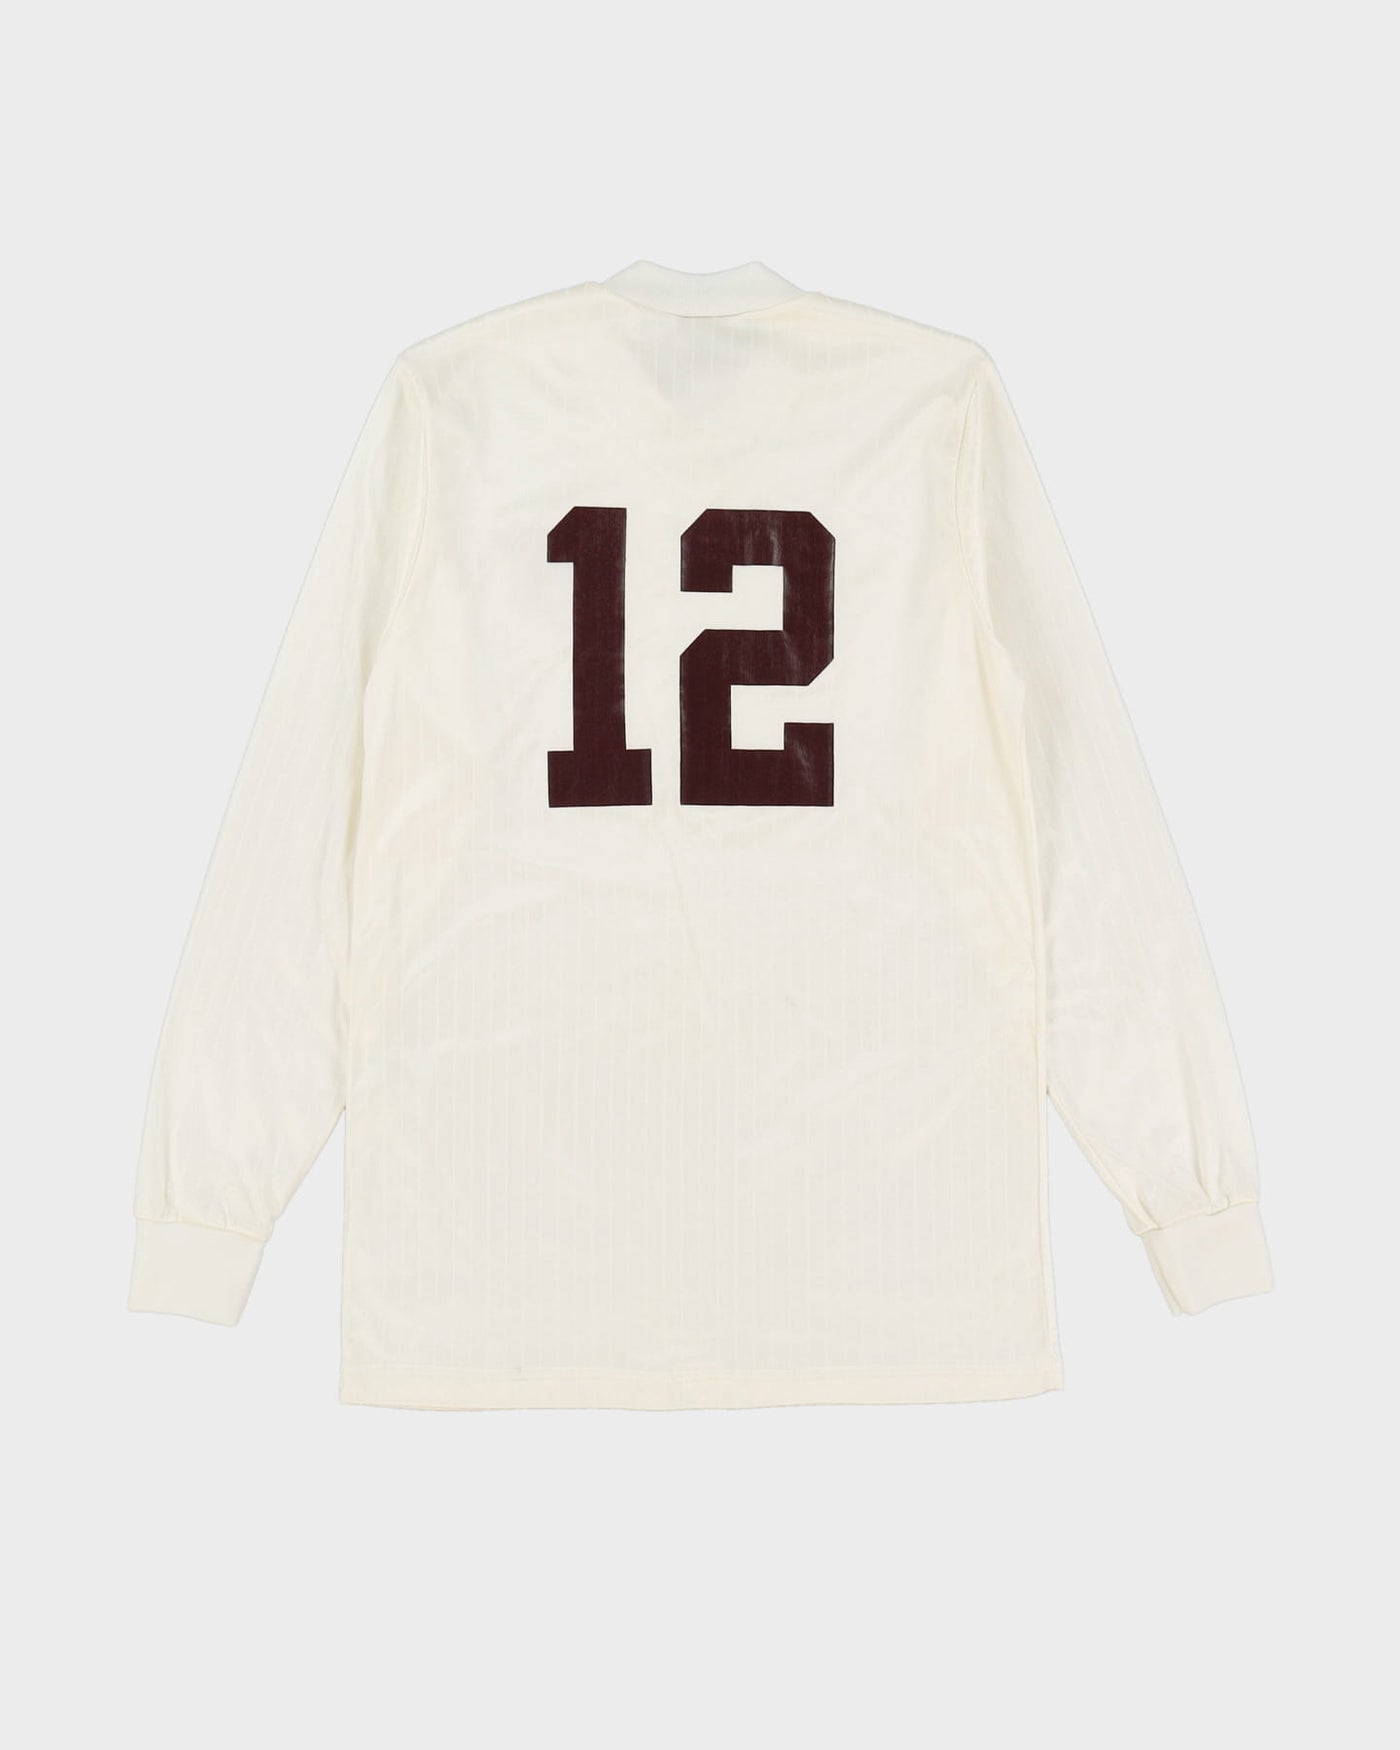 Vintage 70s Bowen Pub Canada White Long Sleeve Football Shirt / Jersey - S